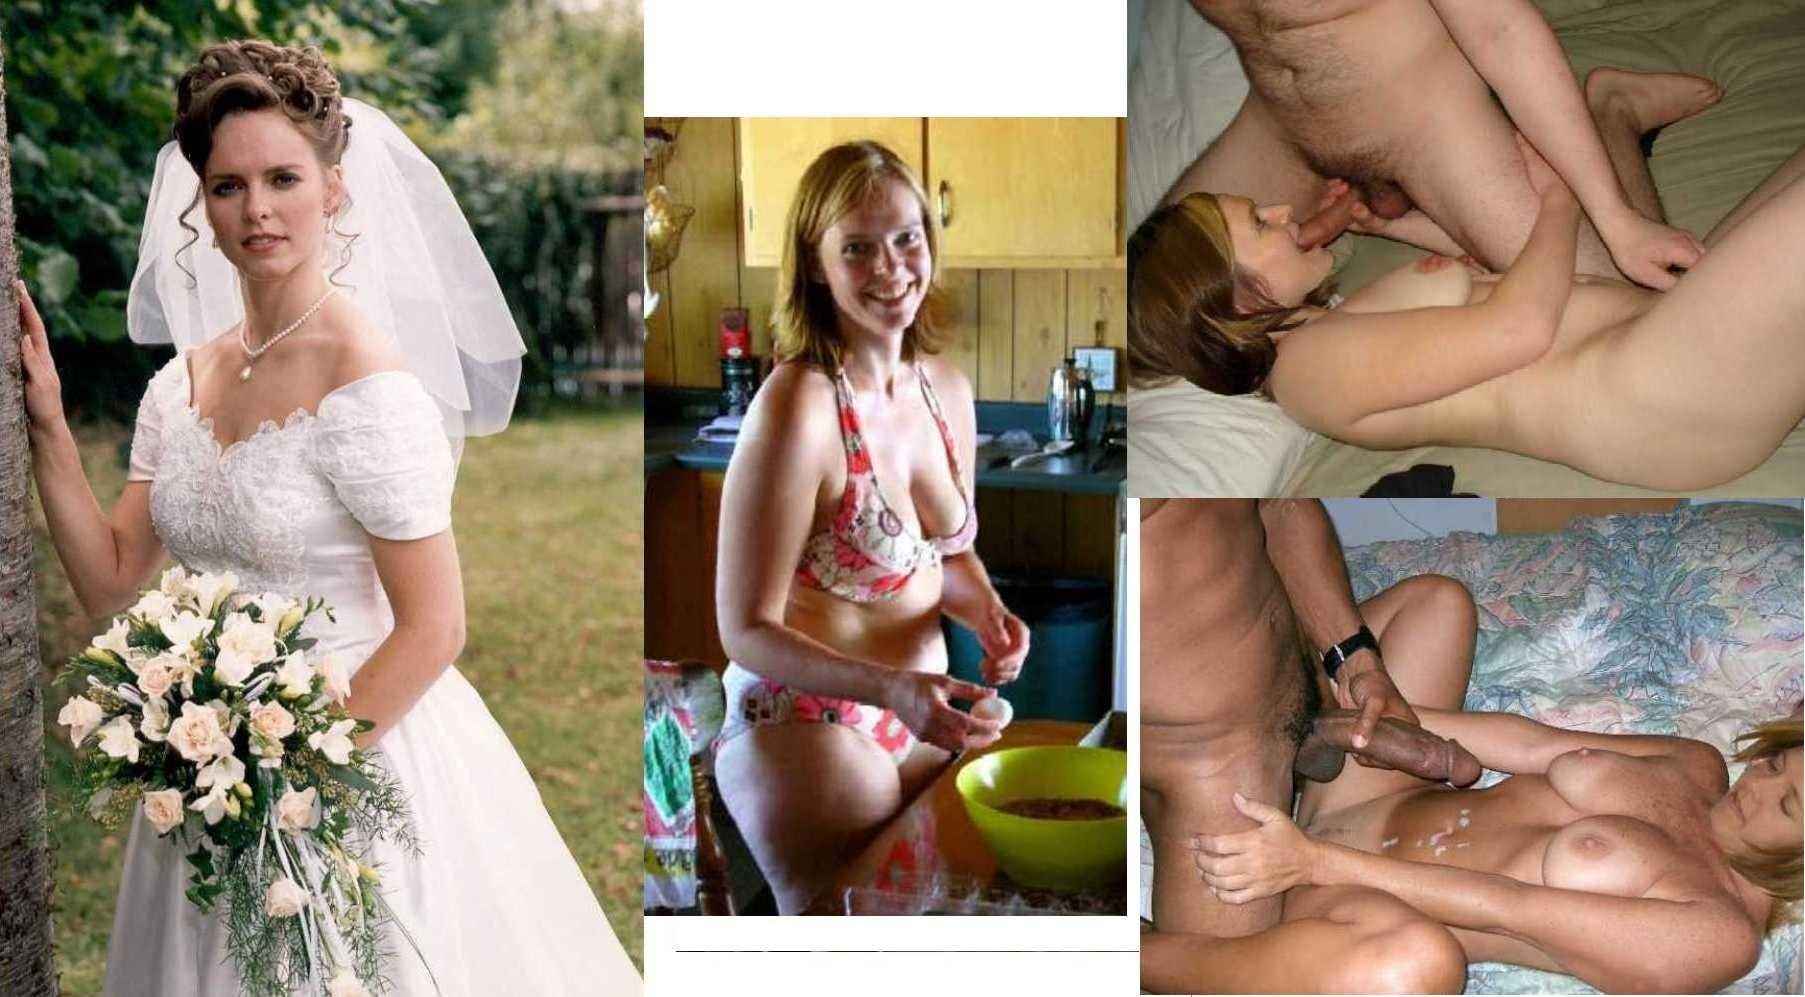 nude pics of married women